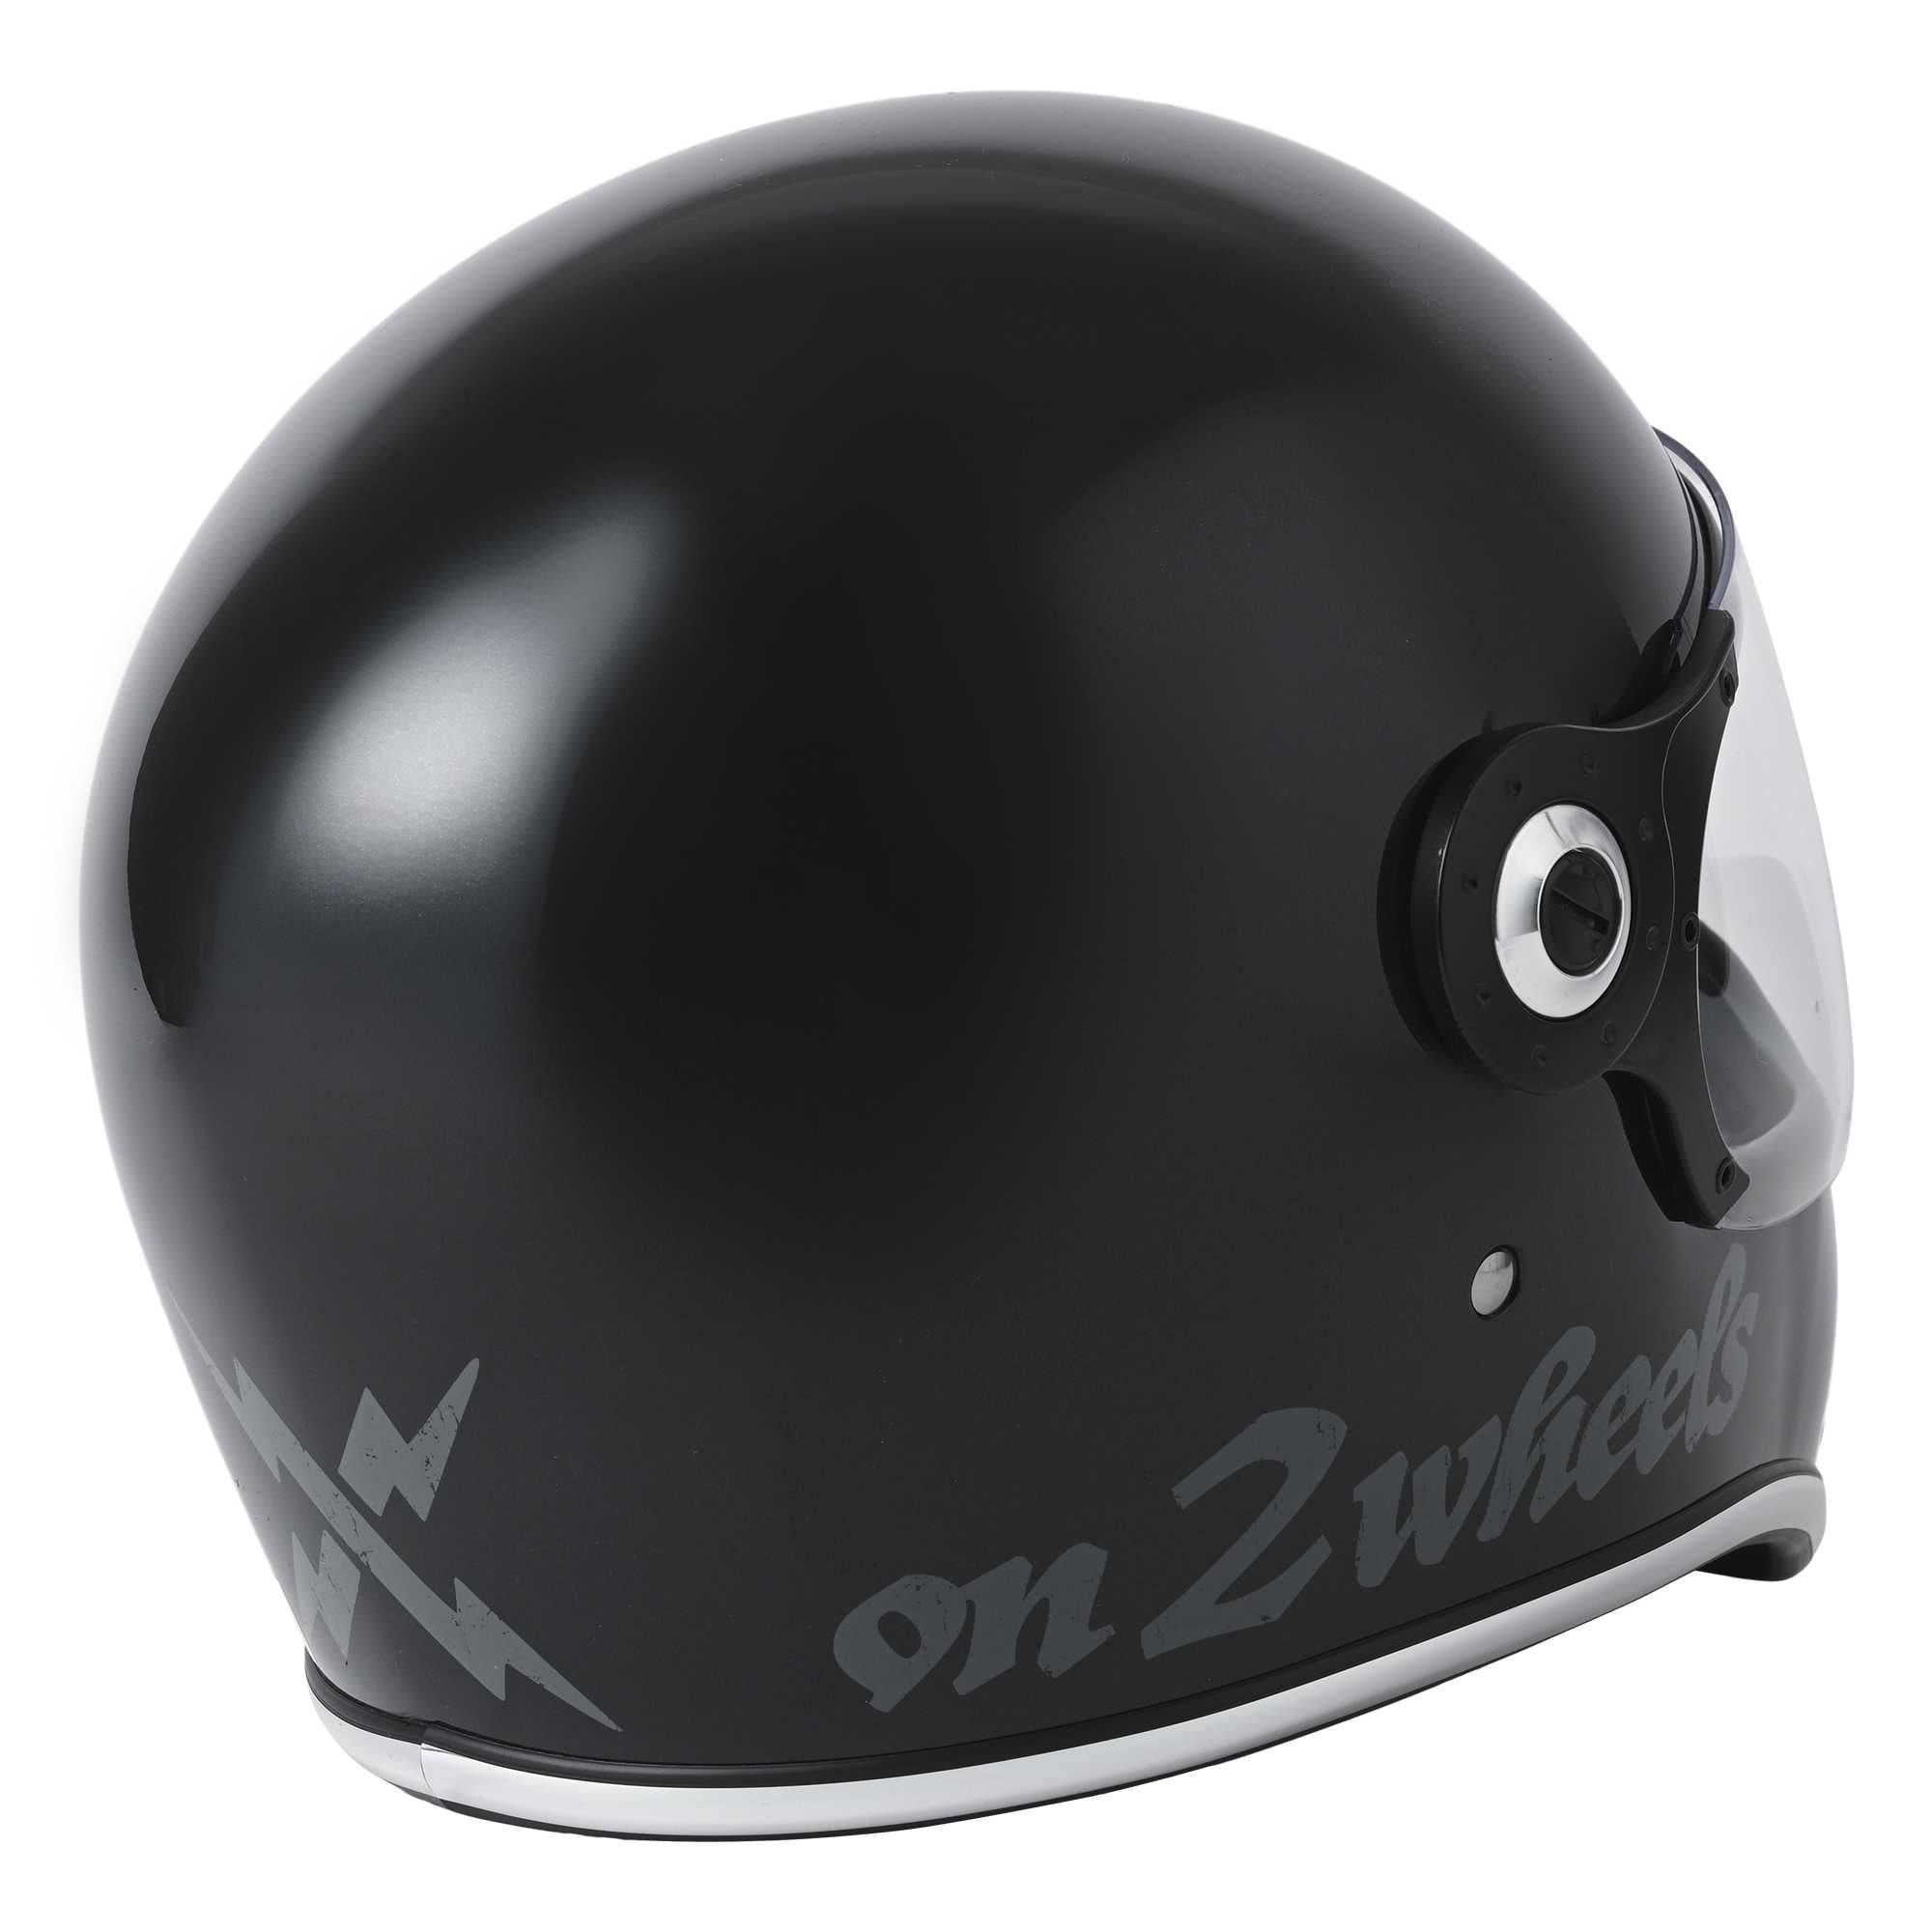 RIDEZ X HELMET 数量限定モデル 2WHEEL'S LIFE バイク用フルフェイスヘルメット